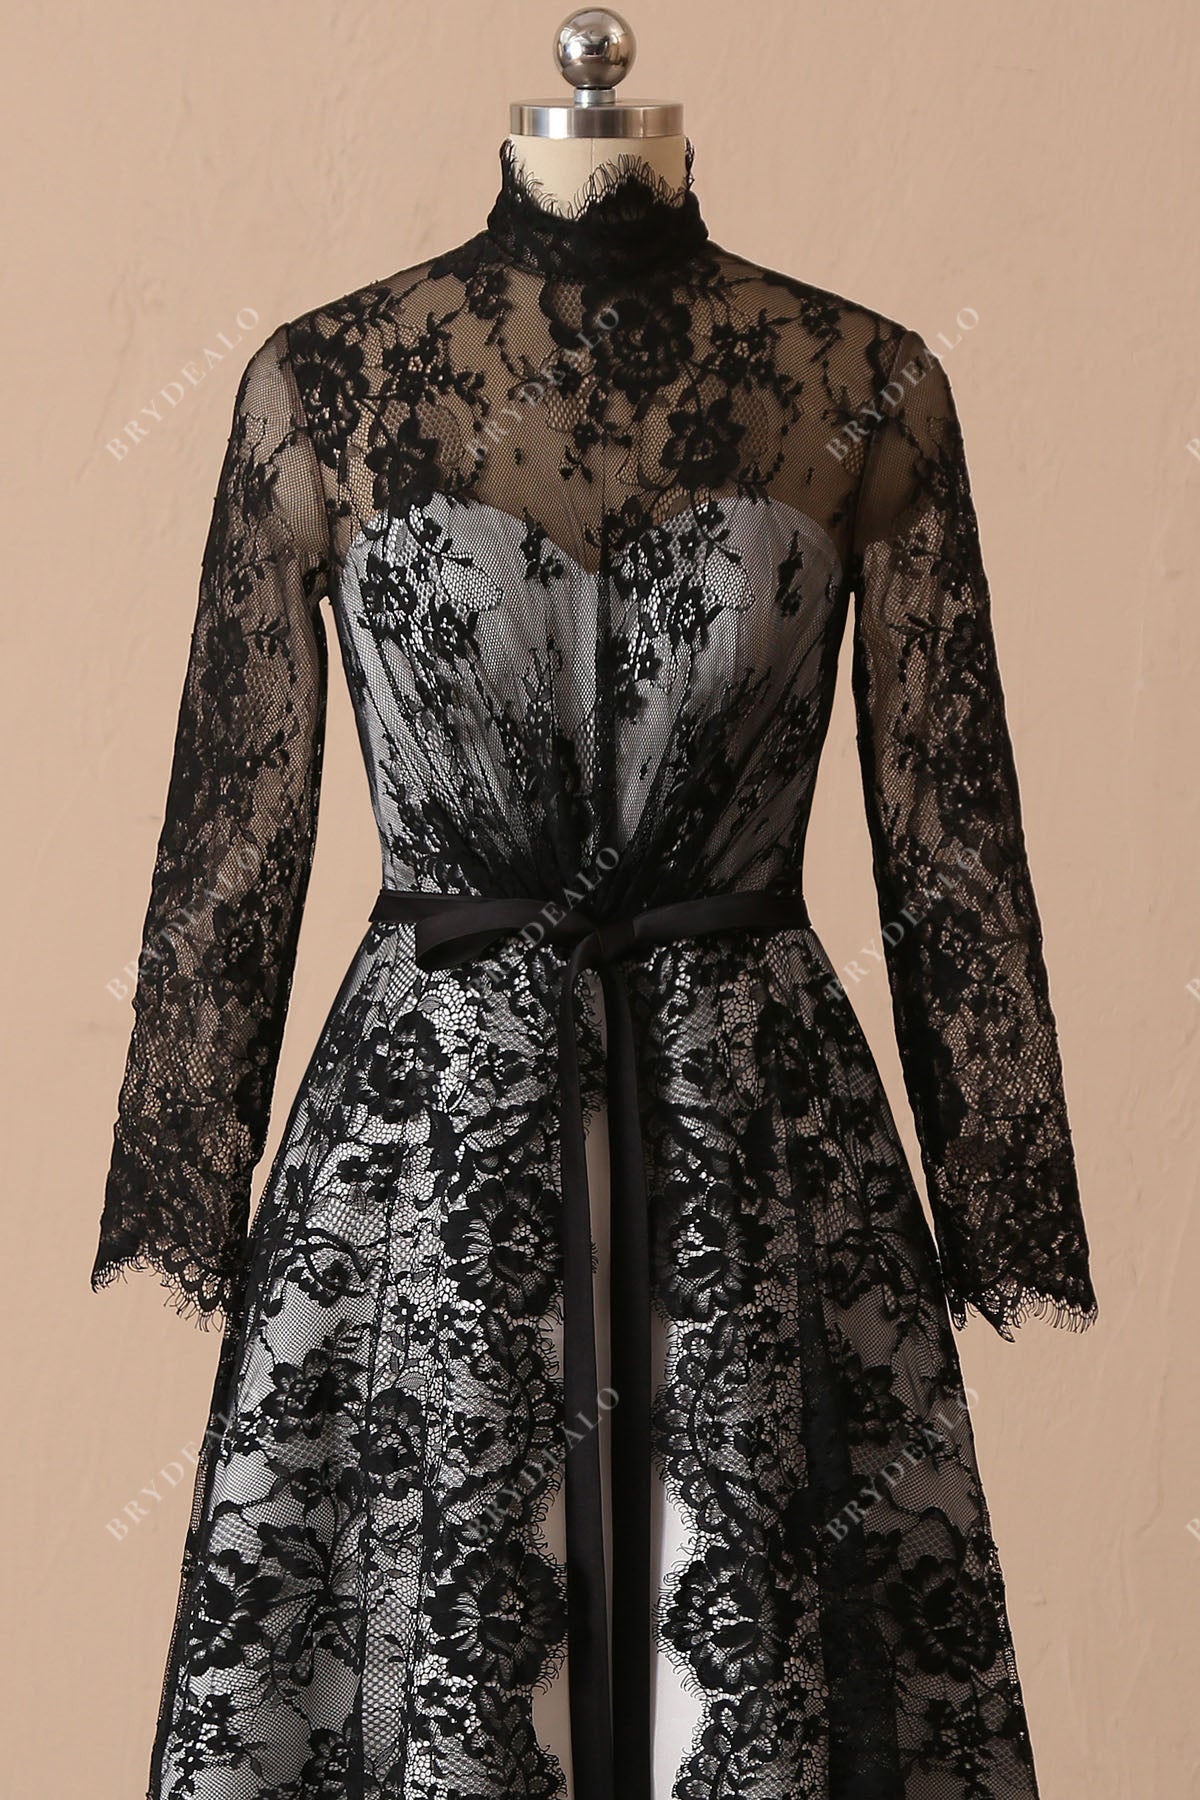 sheer long sleeves black lace dress